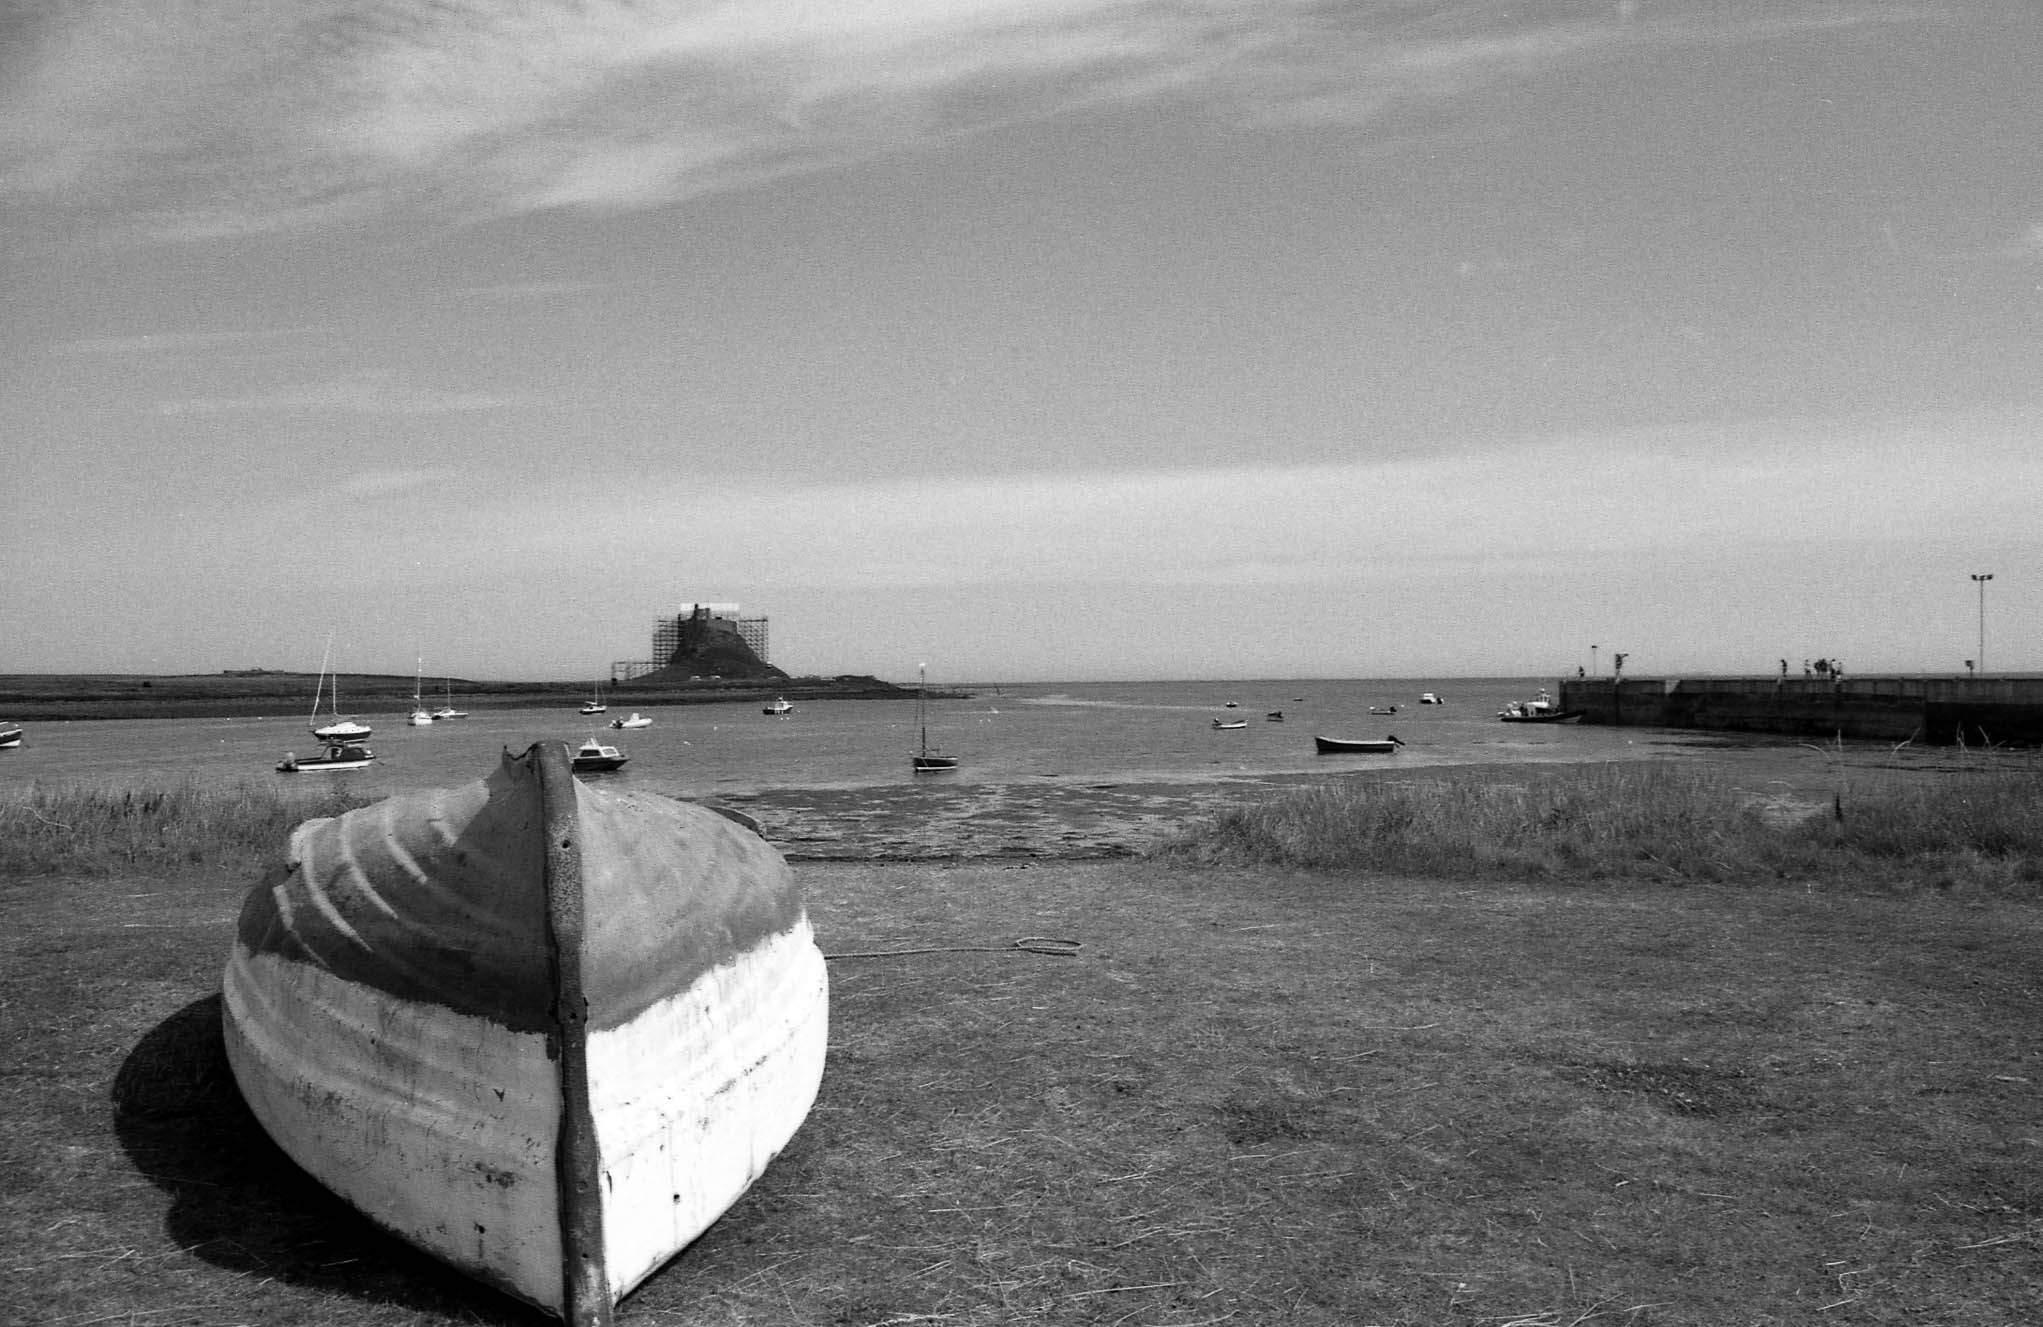 @debrawilsonsays Lindisfarne - Pentax MZ5n on Ilford FP4+ #ilfordphoto #fridayfavourites #boatsonfilm